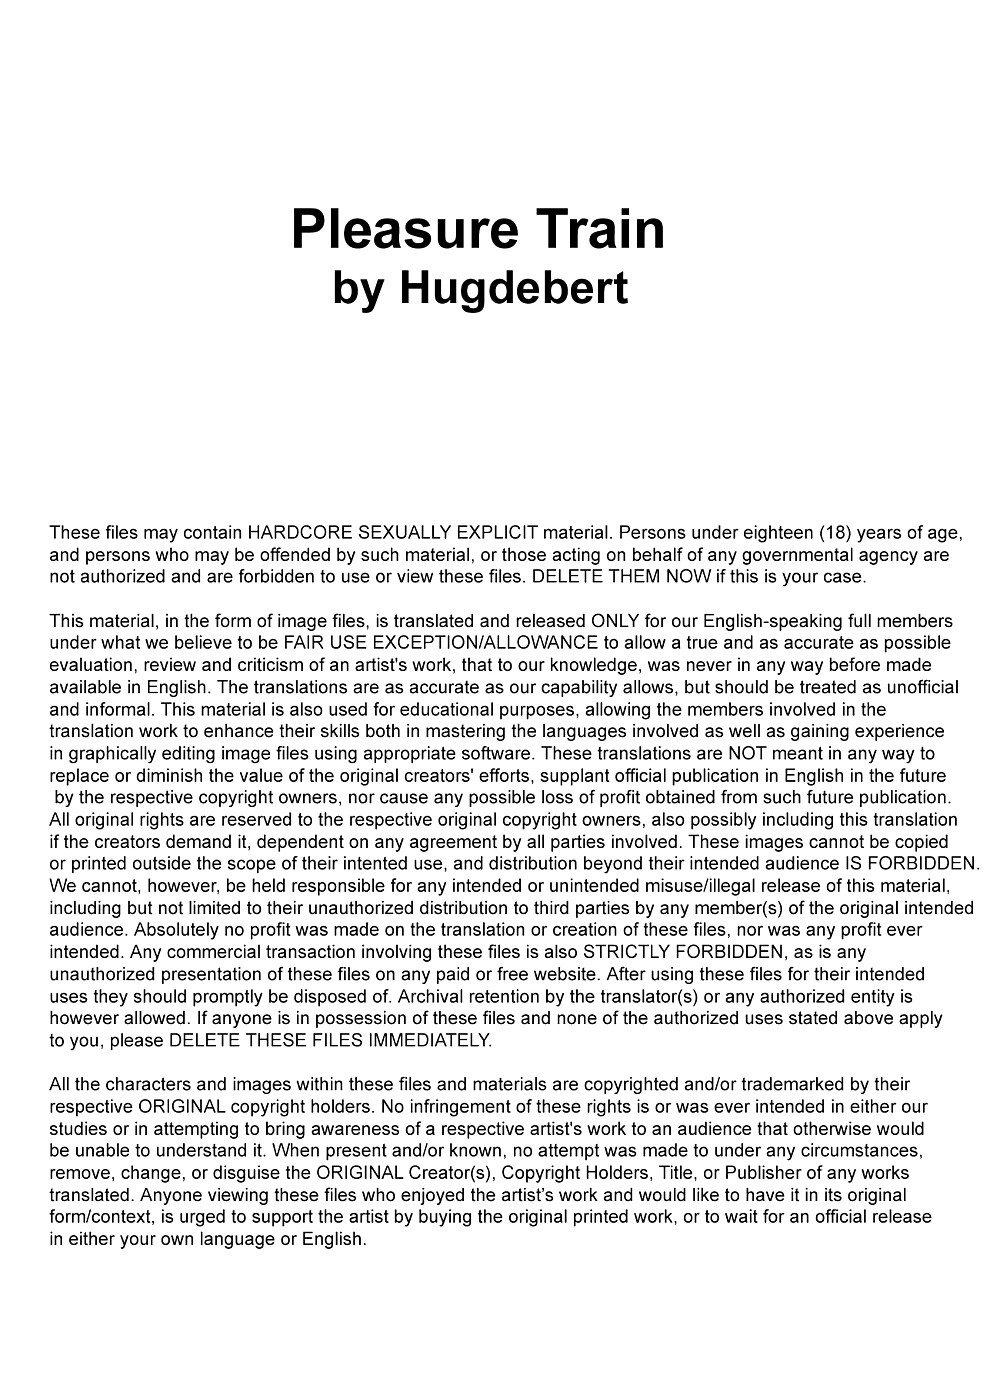 Hugdebert - Pleasure Train (ENG) #36907510